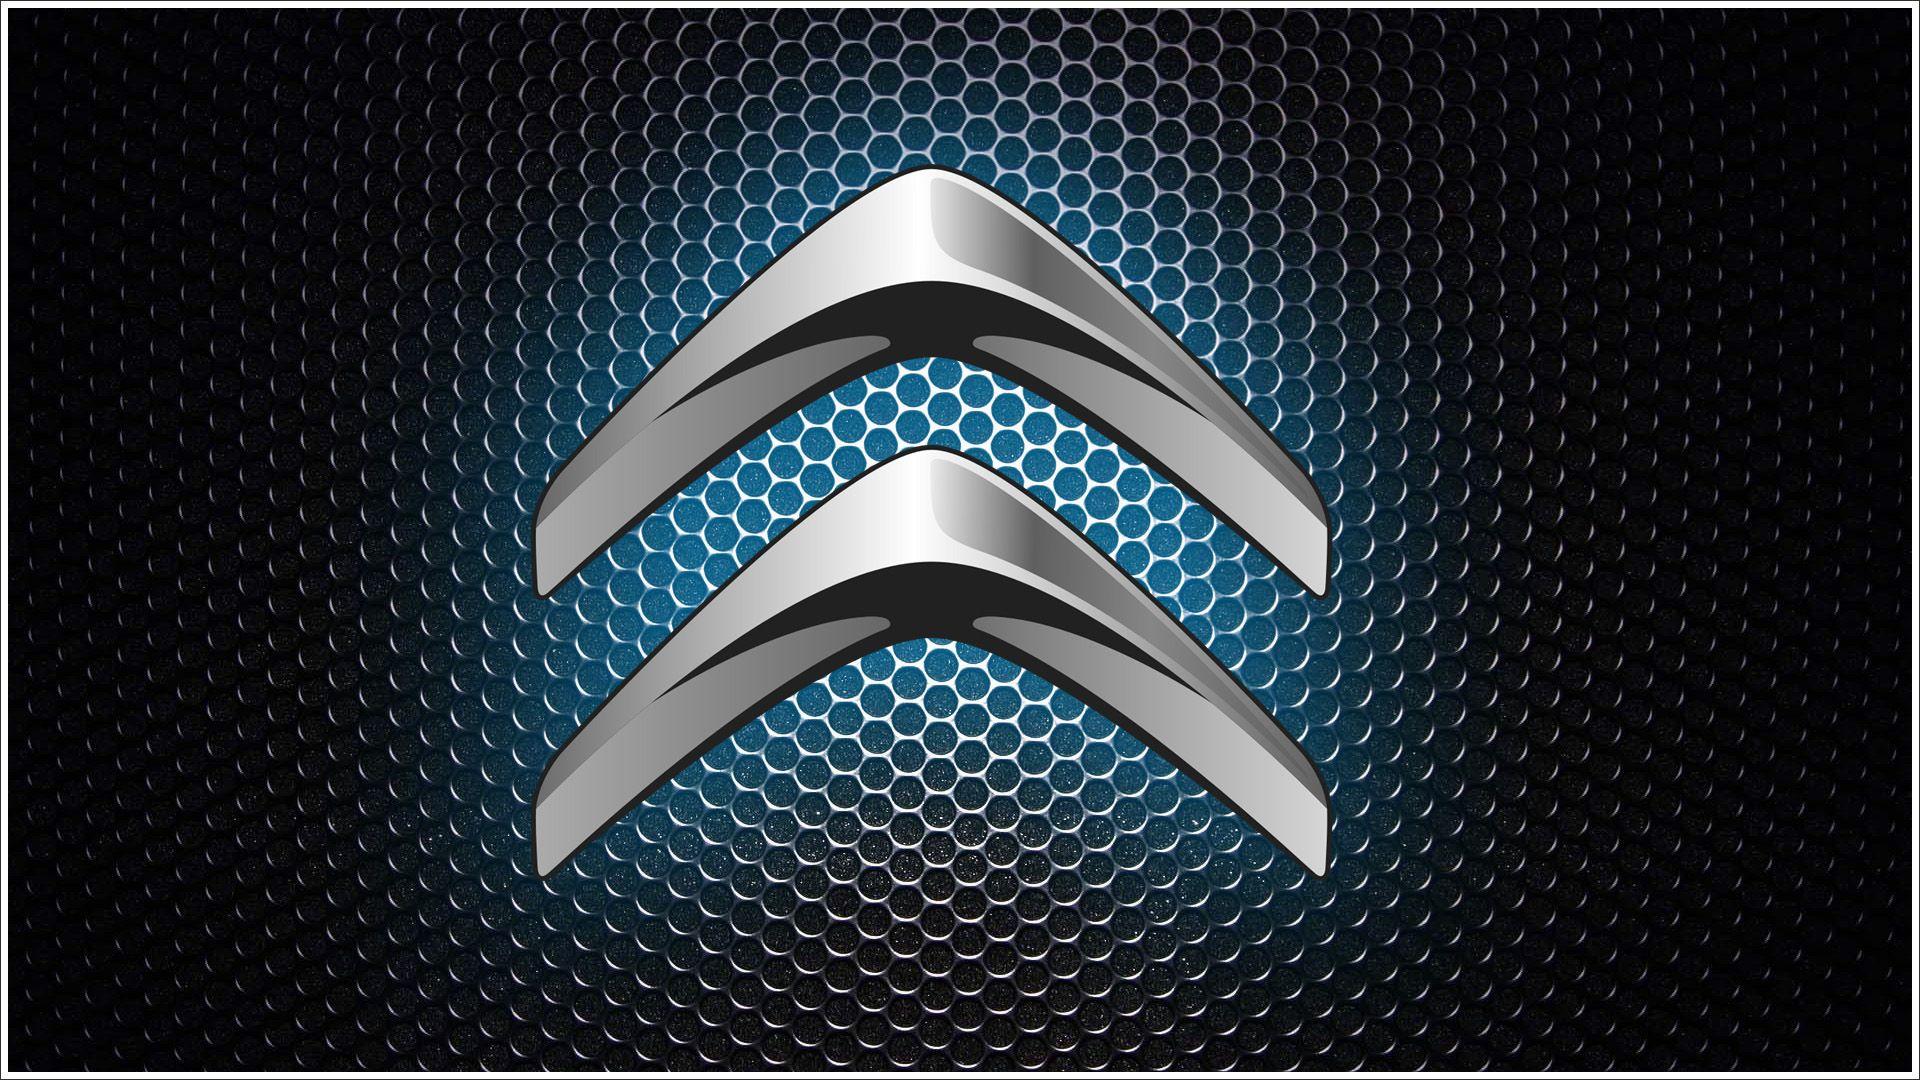 Citroen Logo - Citroën Logo Meaning and History, latest models | World Cars Brands